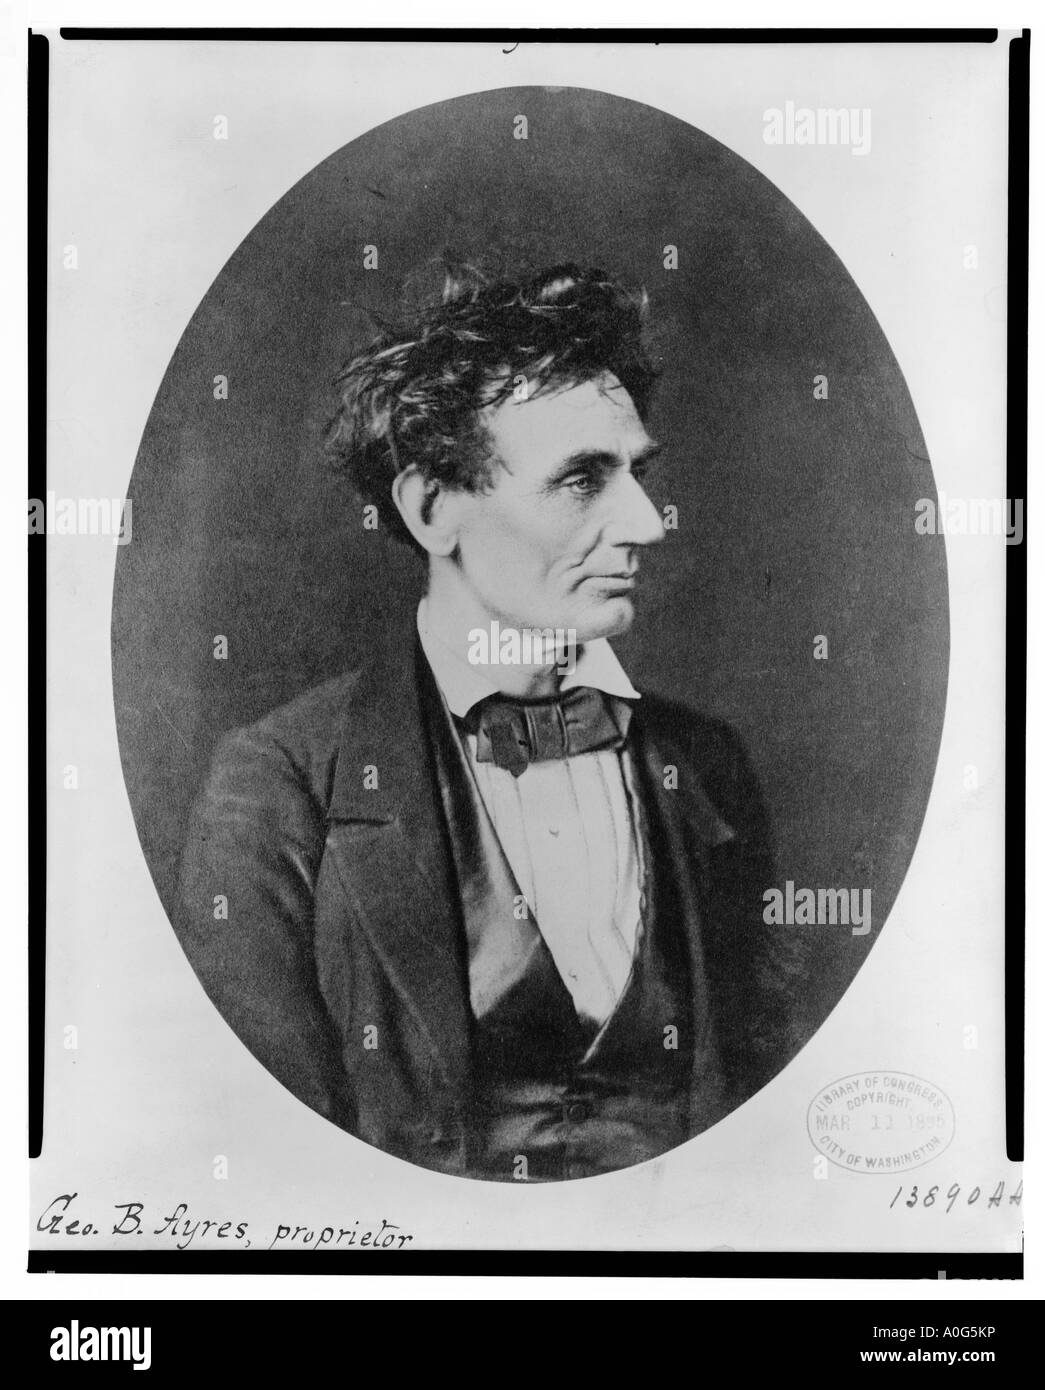 Abraham Lincoln Sixteenth President 1861 1865 Born February 12 1809 in Hodgenville Hardin County Kentucky Stock Photo